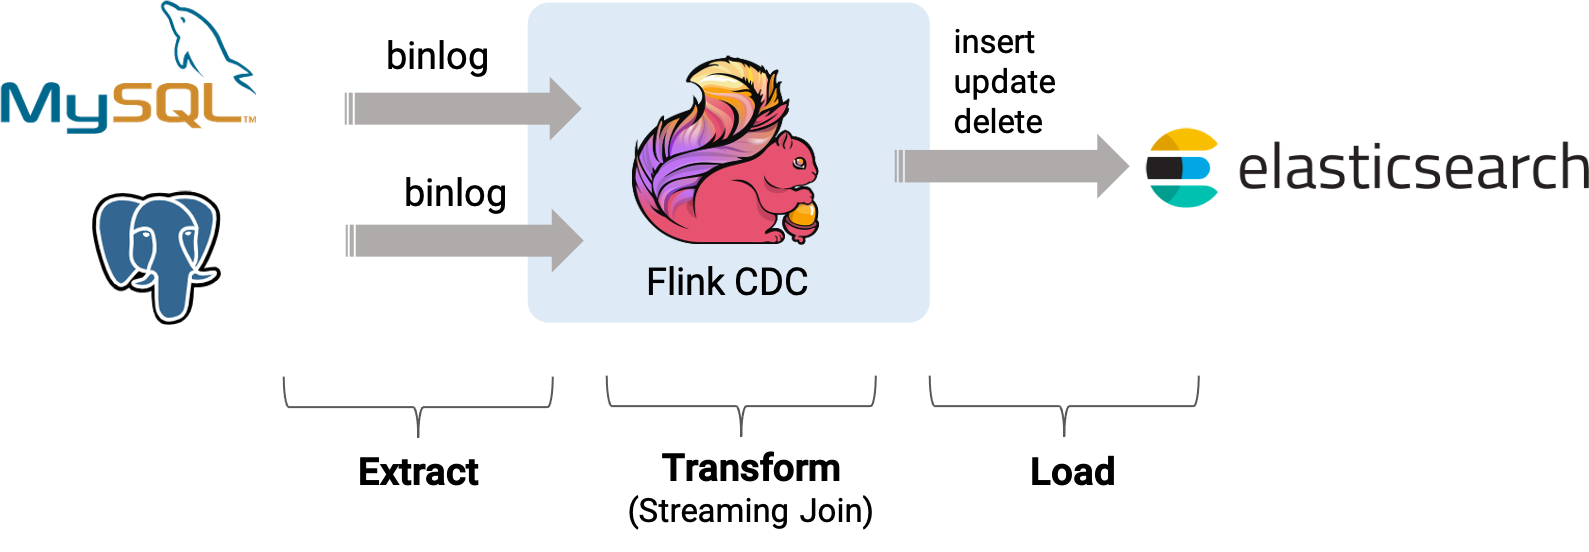 【大数据】基于 Flink CDC 构建 MySQL 和 Postgres 的 Streaming ETL